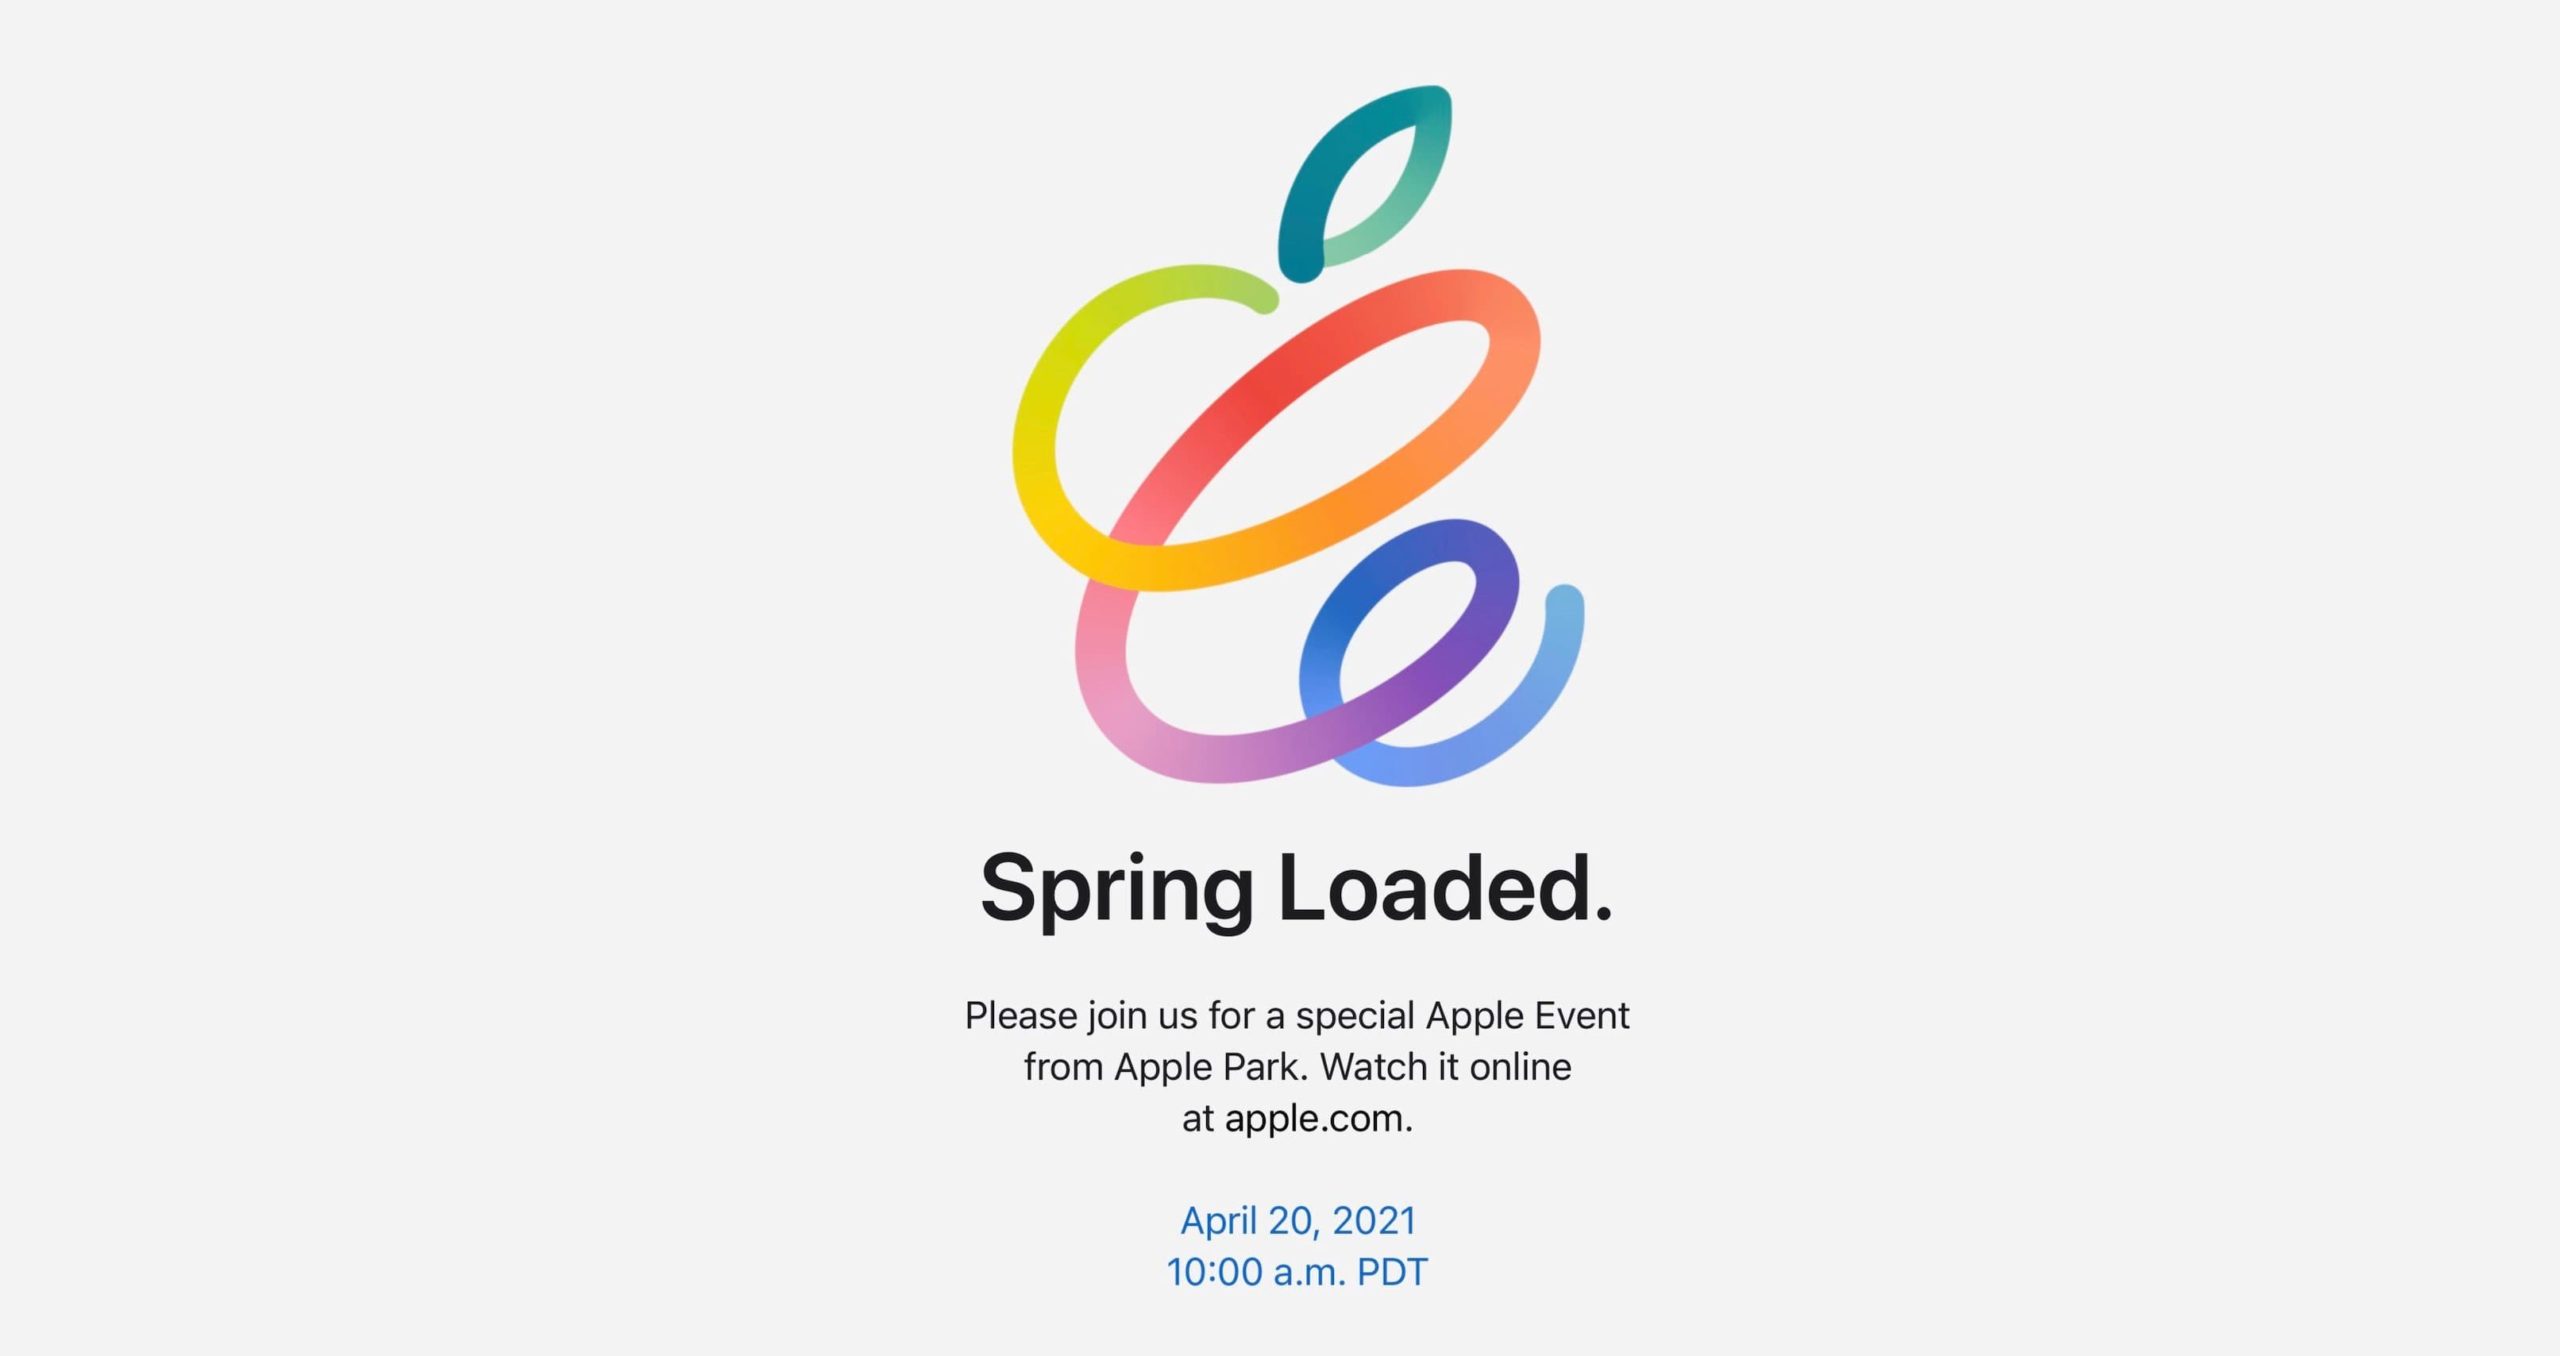 Apple's event invite